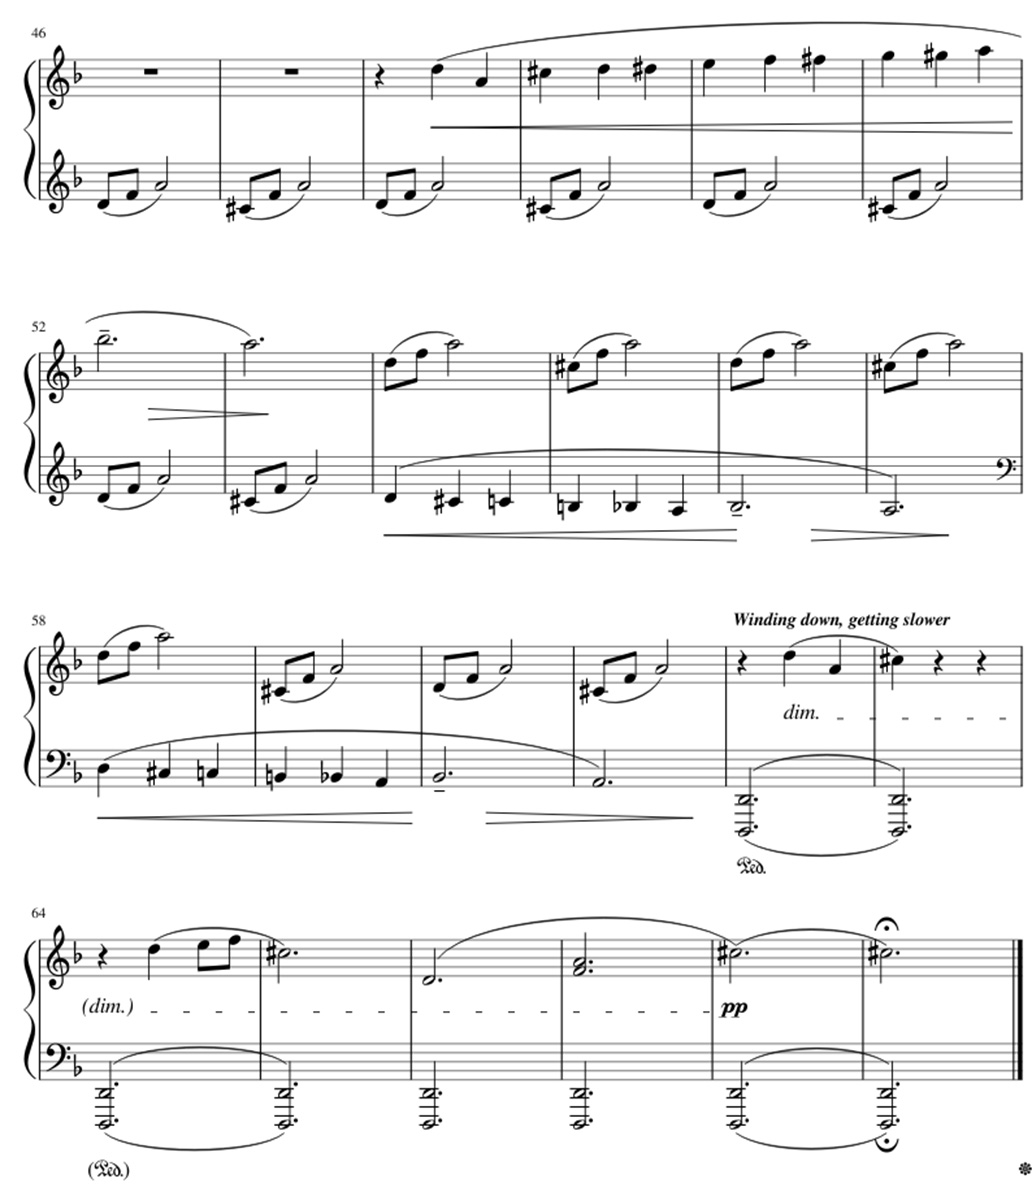 Frozen Tears sheet music notes 3